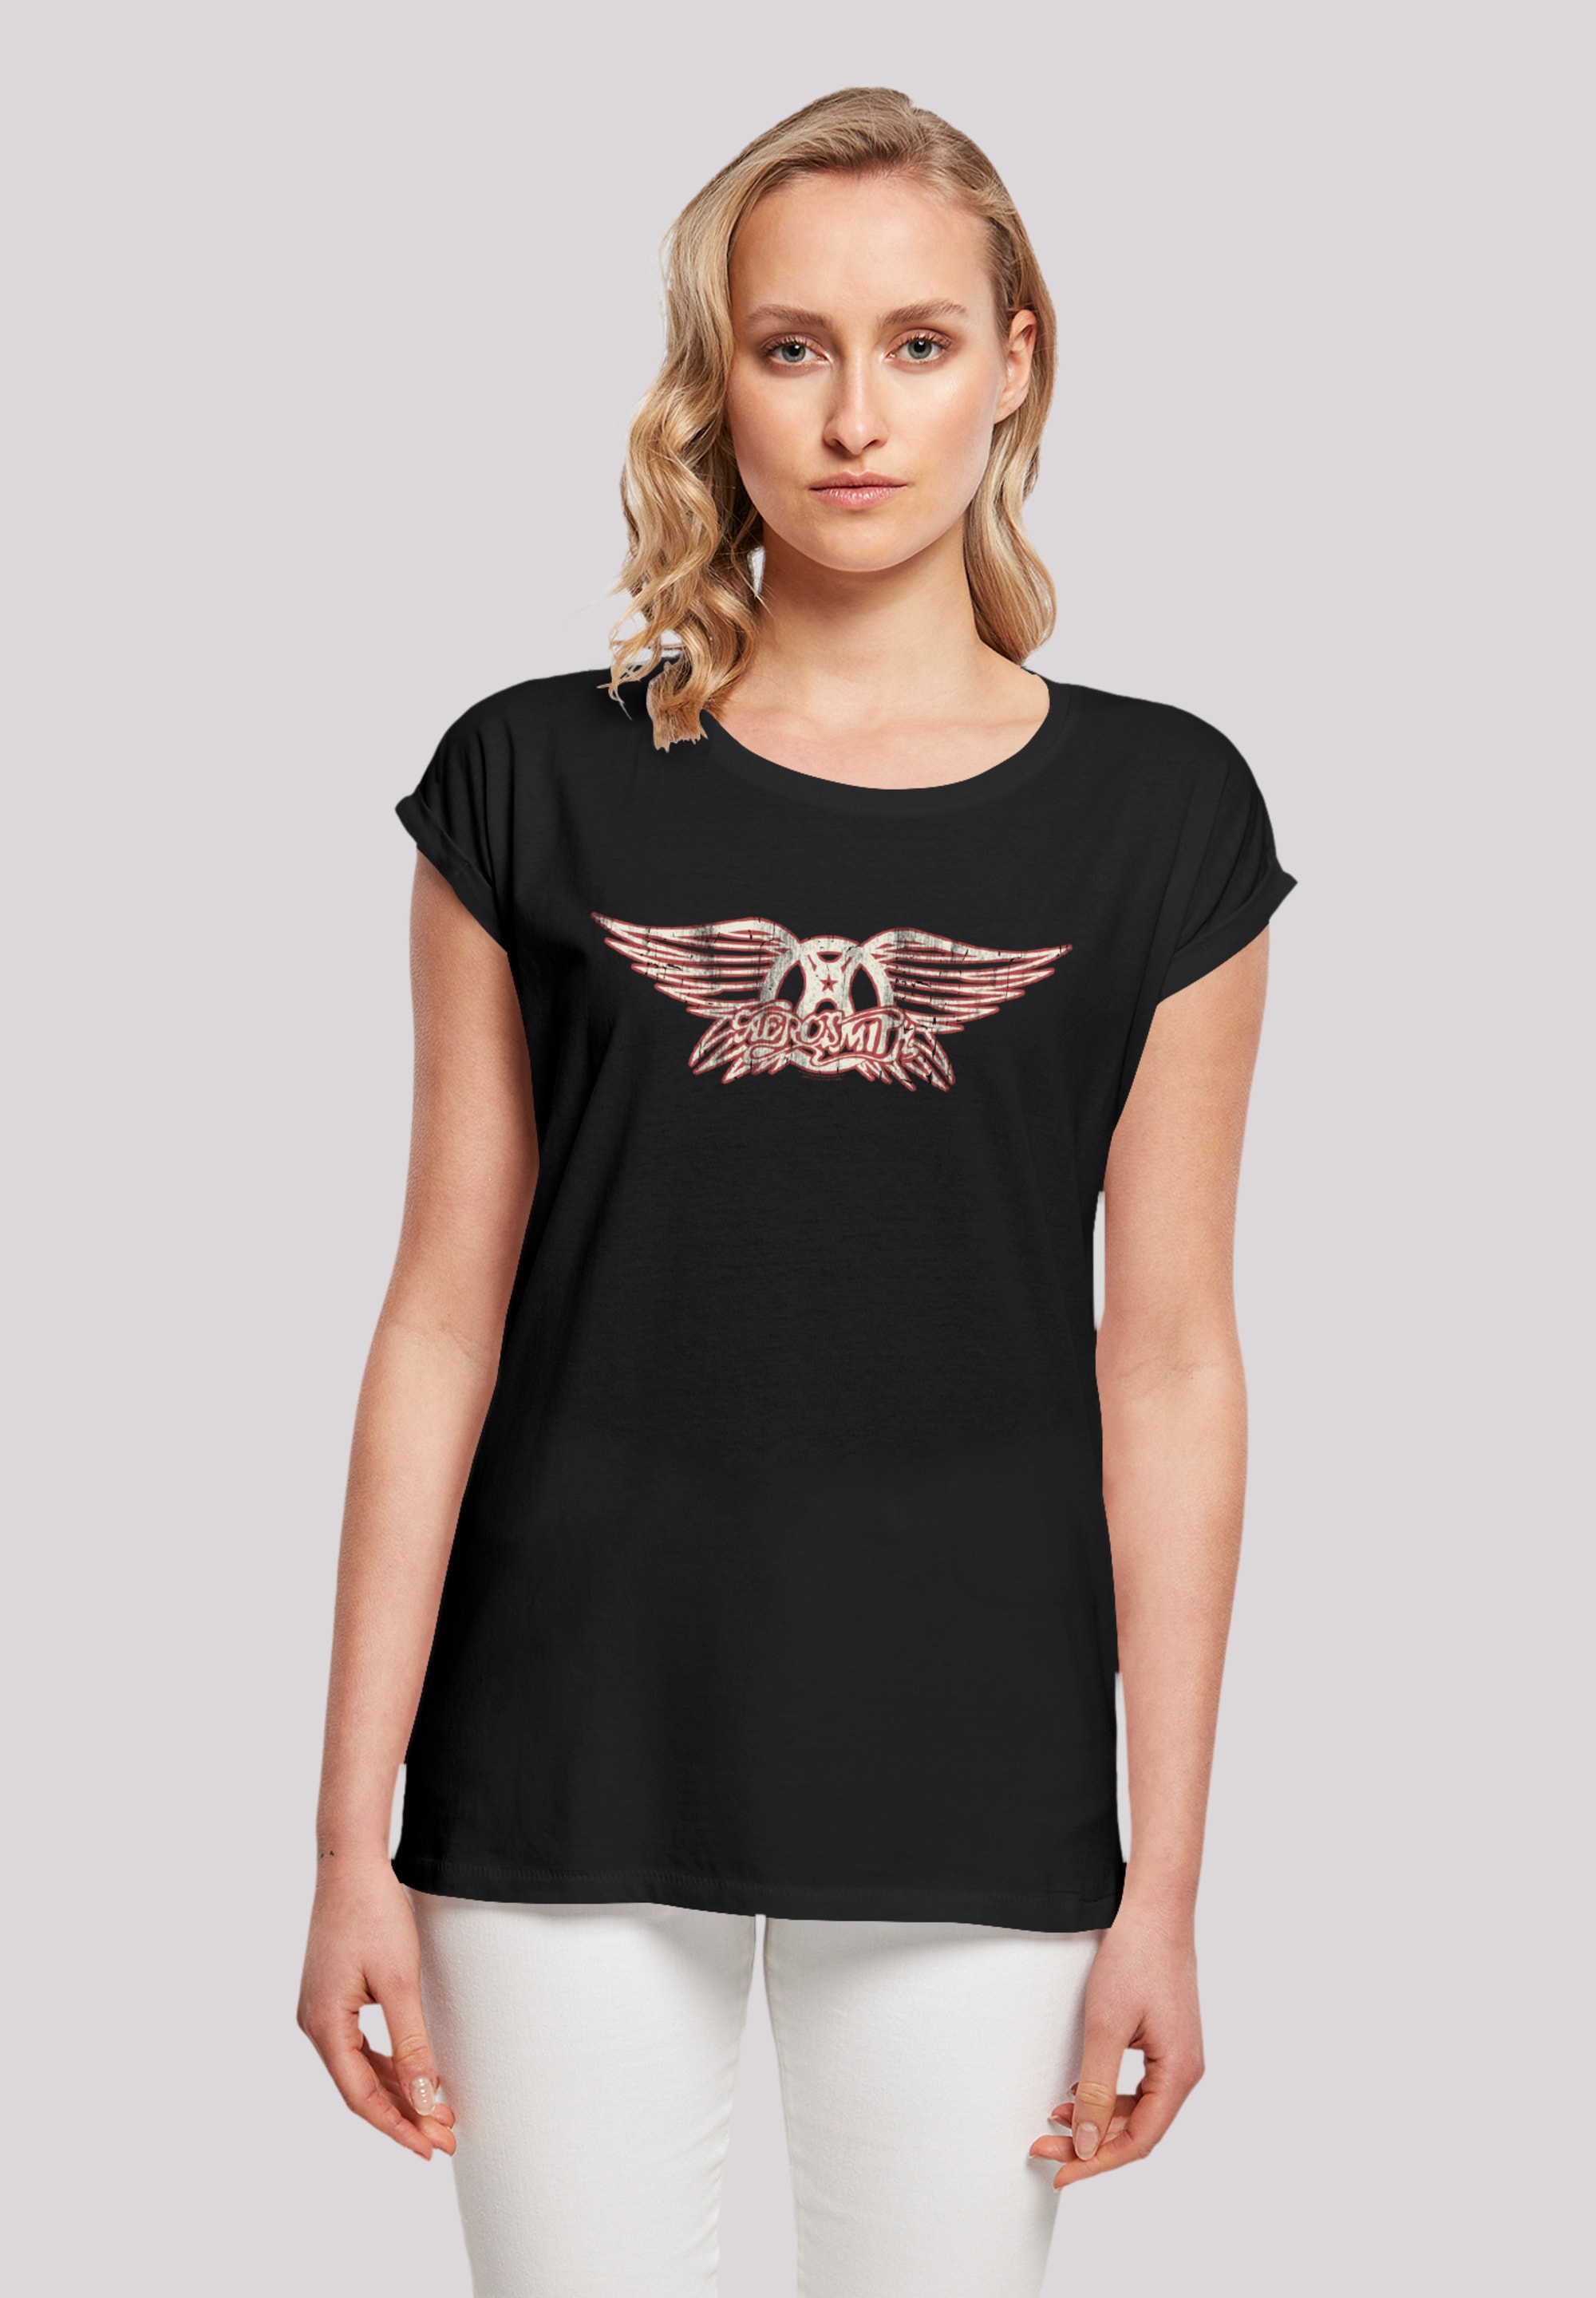 Band Rock-Musik, online | Qualität, Logo«, Rock »Aerosmith BAUR F4NT4STIC Premium Band kaufen T-Shirt